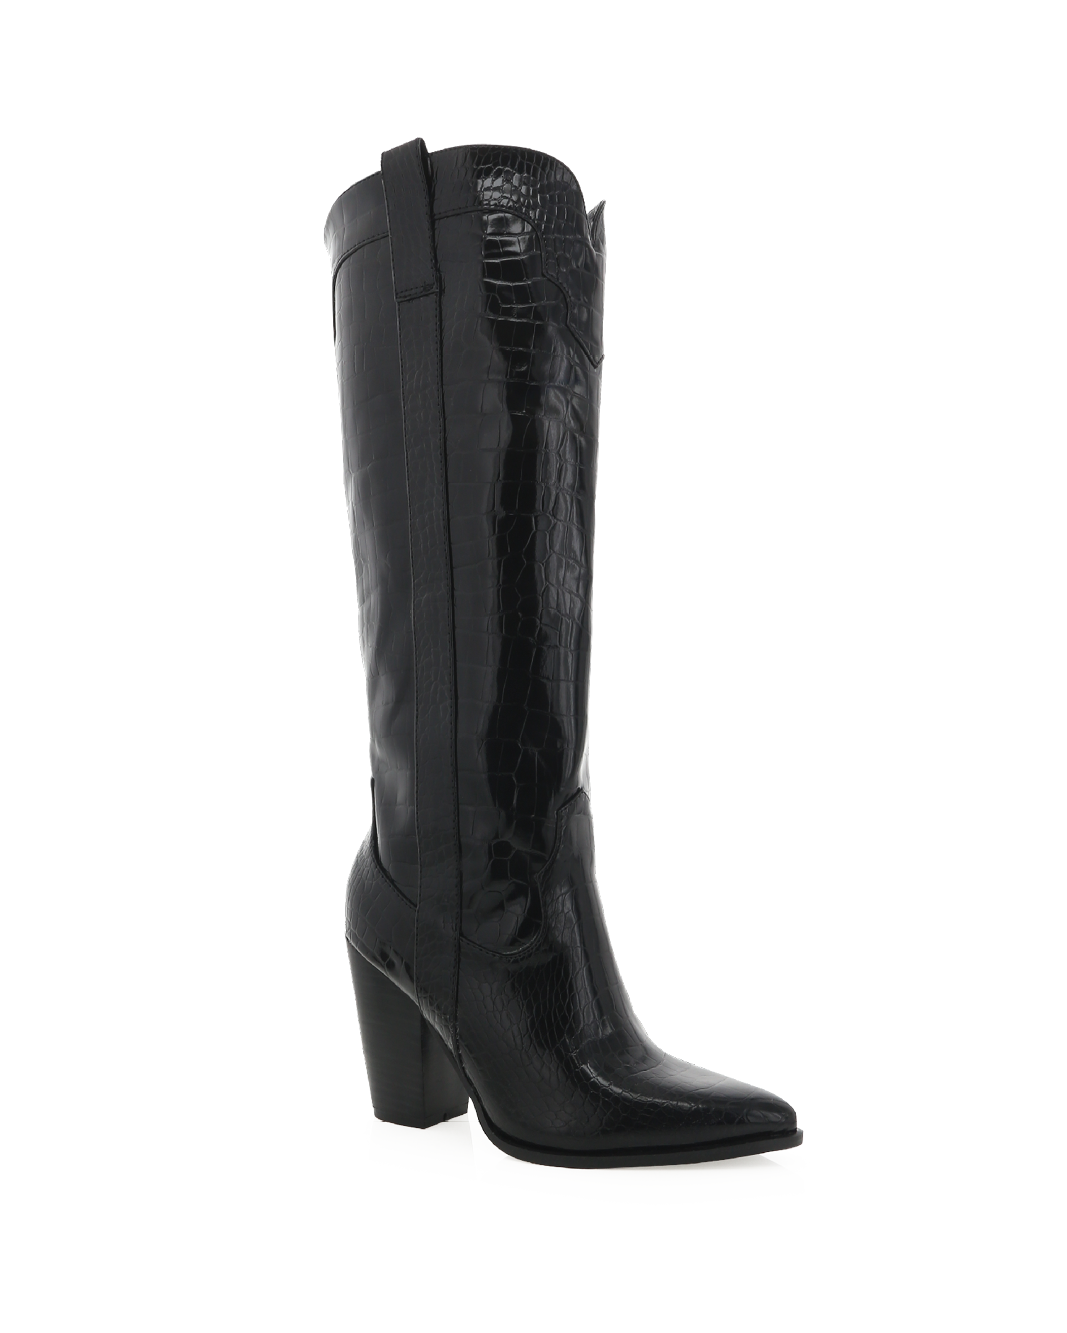 FRANCOISE - SHINY BLACK CROC-Boots-Billini-BILLINI USA